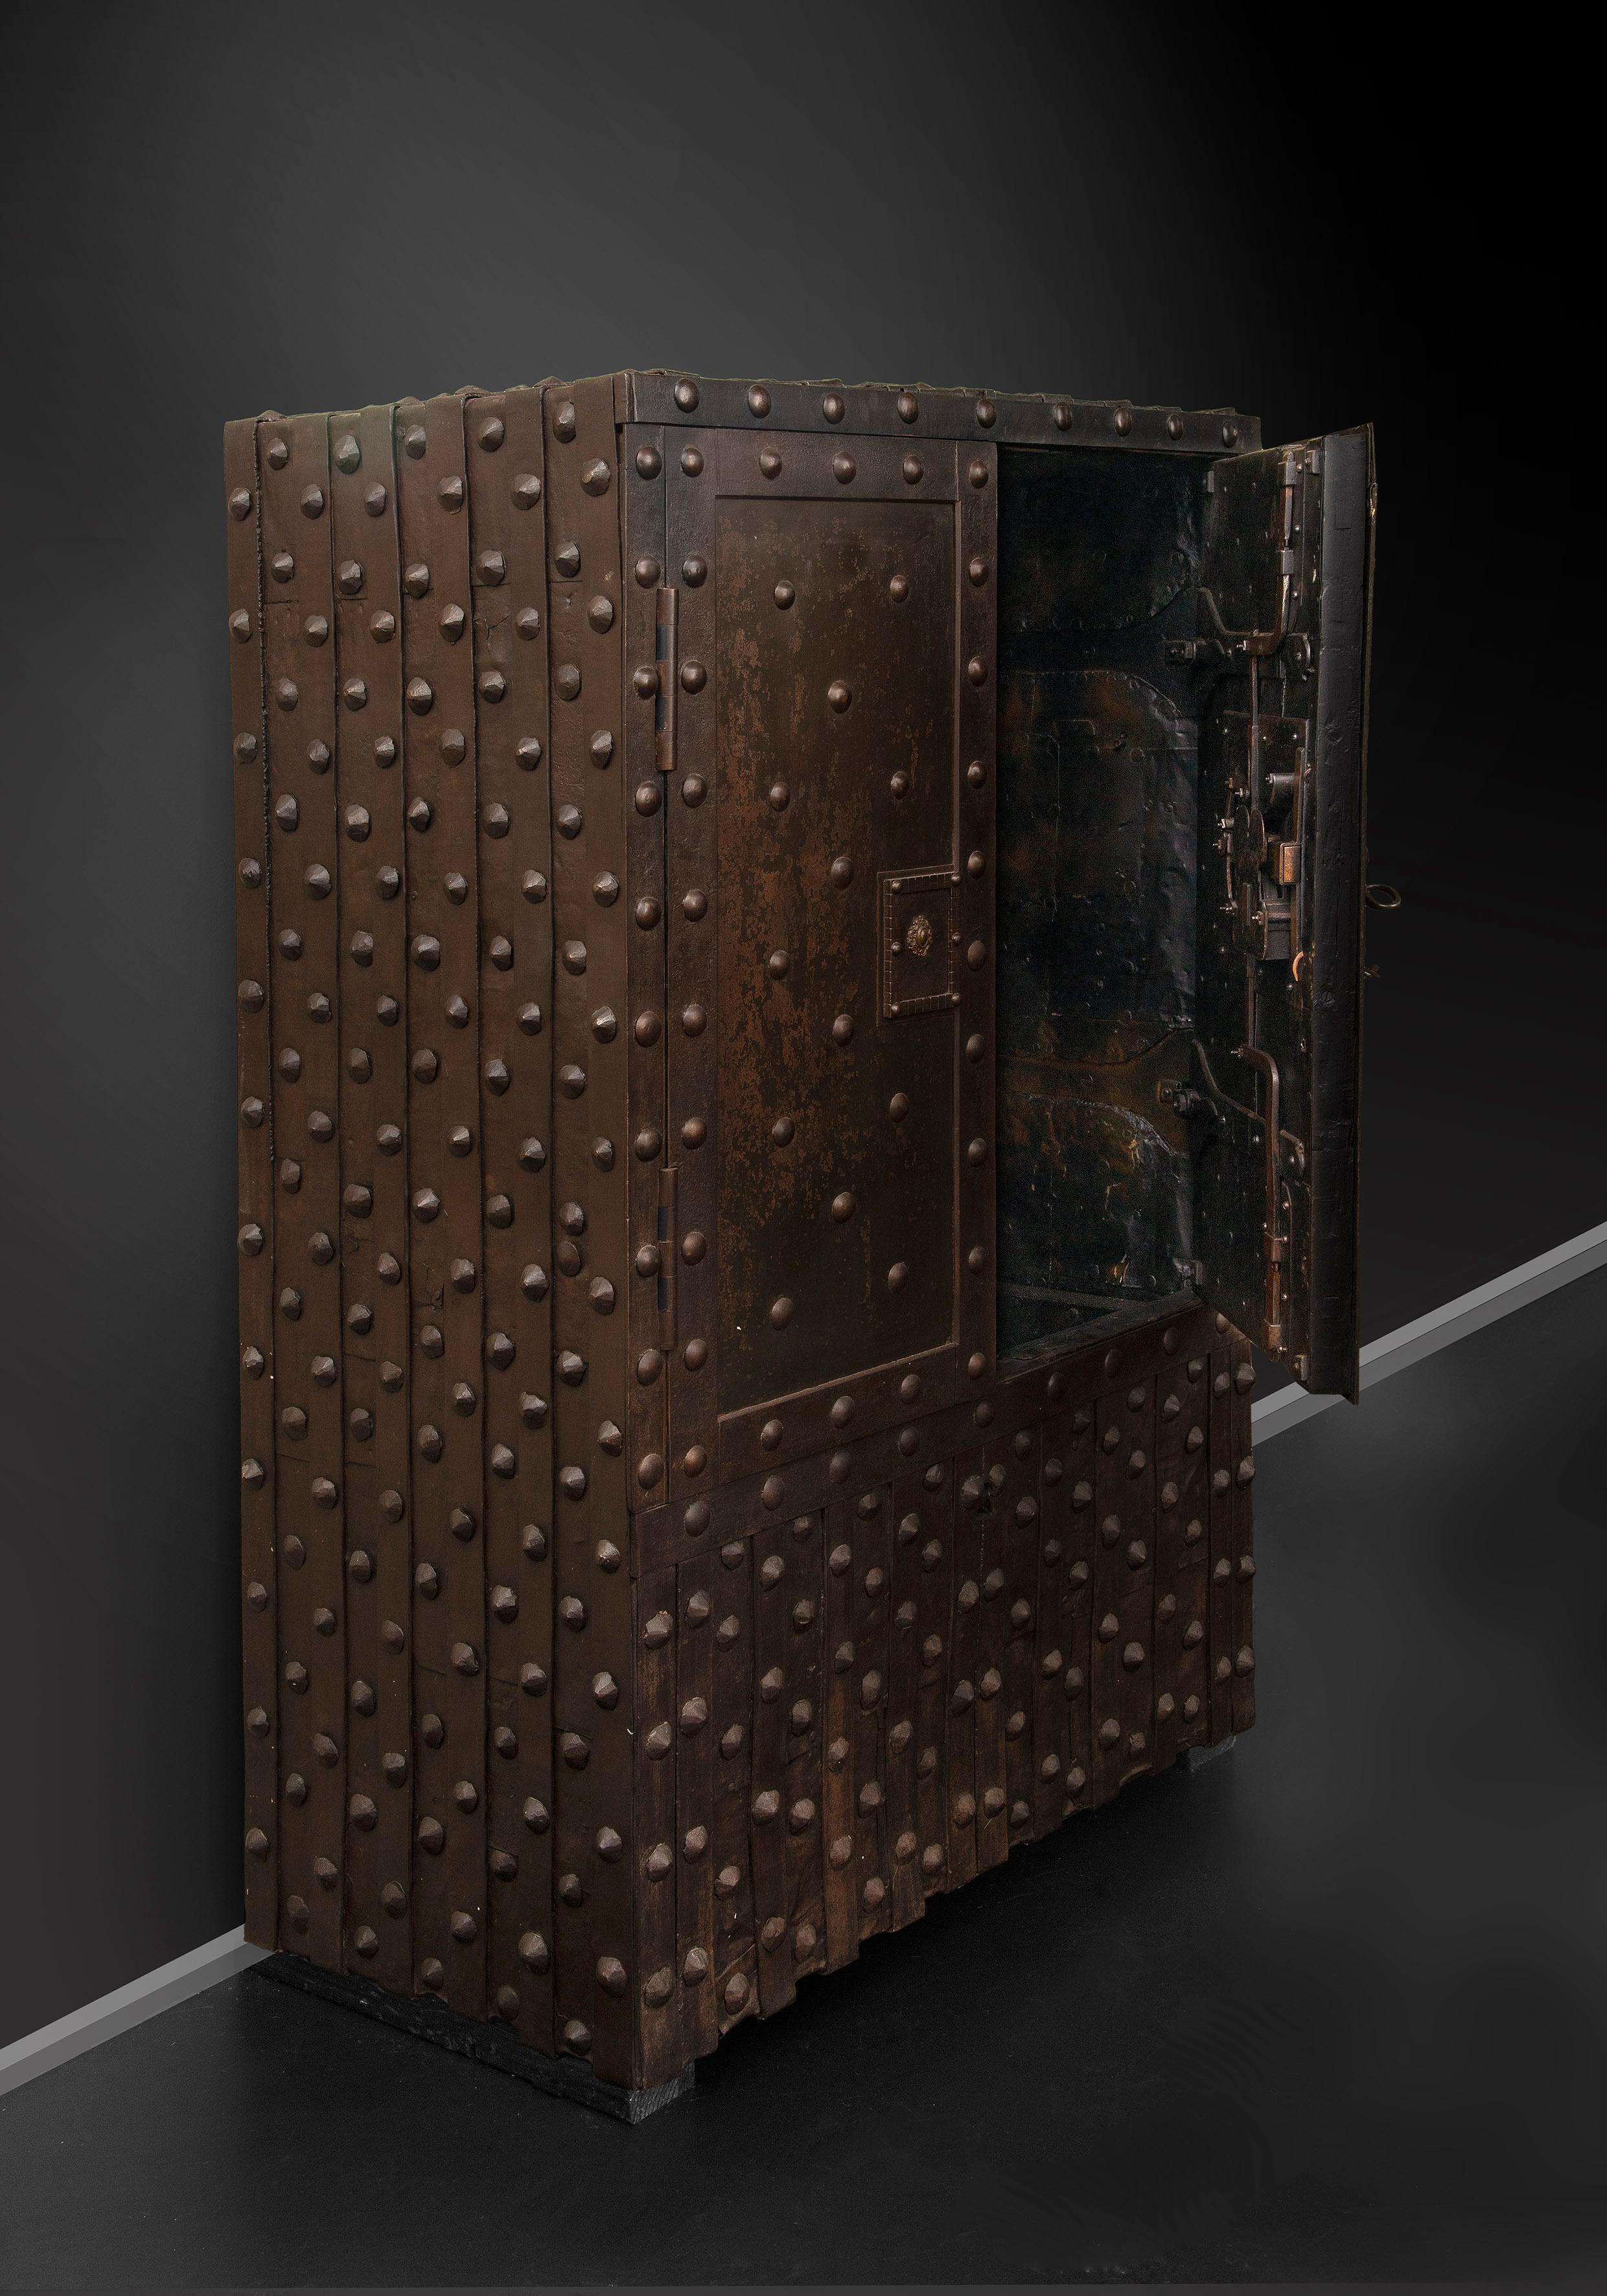 Cassa-forte

Double door safe
Italian, 18th Century
Iron & Wood
 
Height: 157 cm
Width: 104 m
Depth: 53 cm

